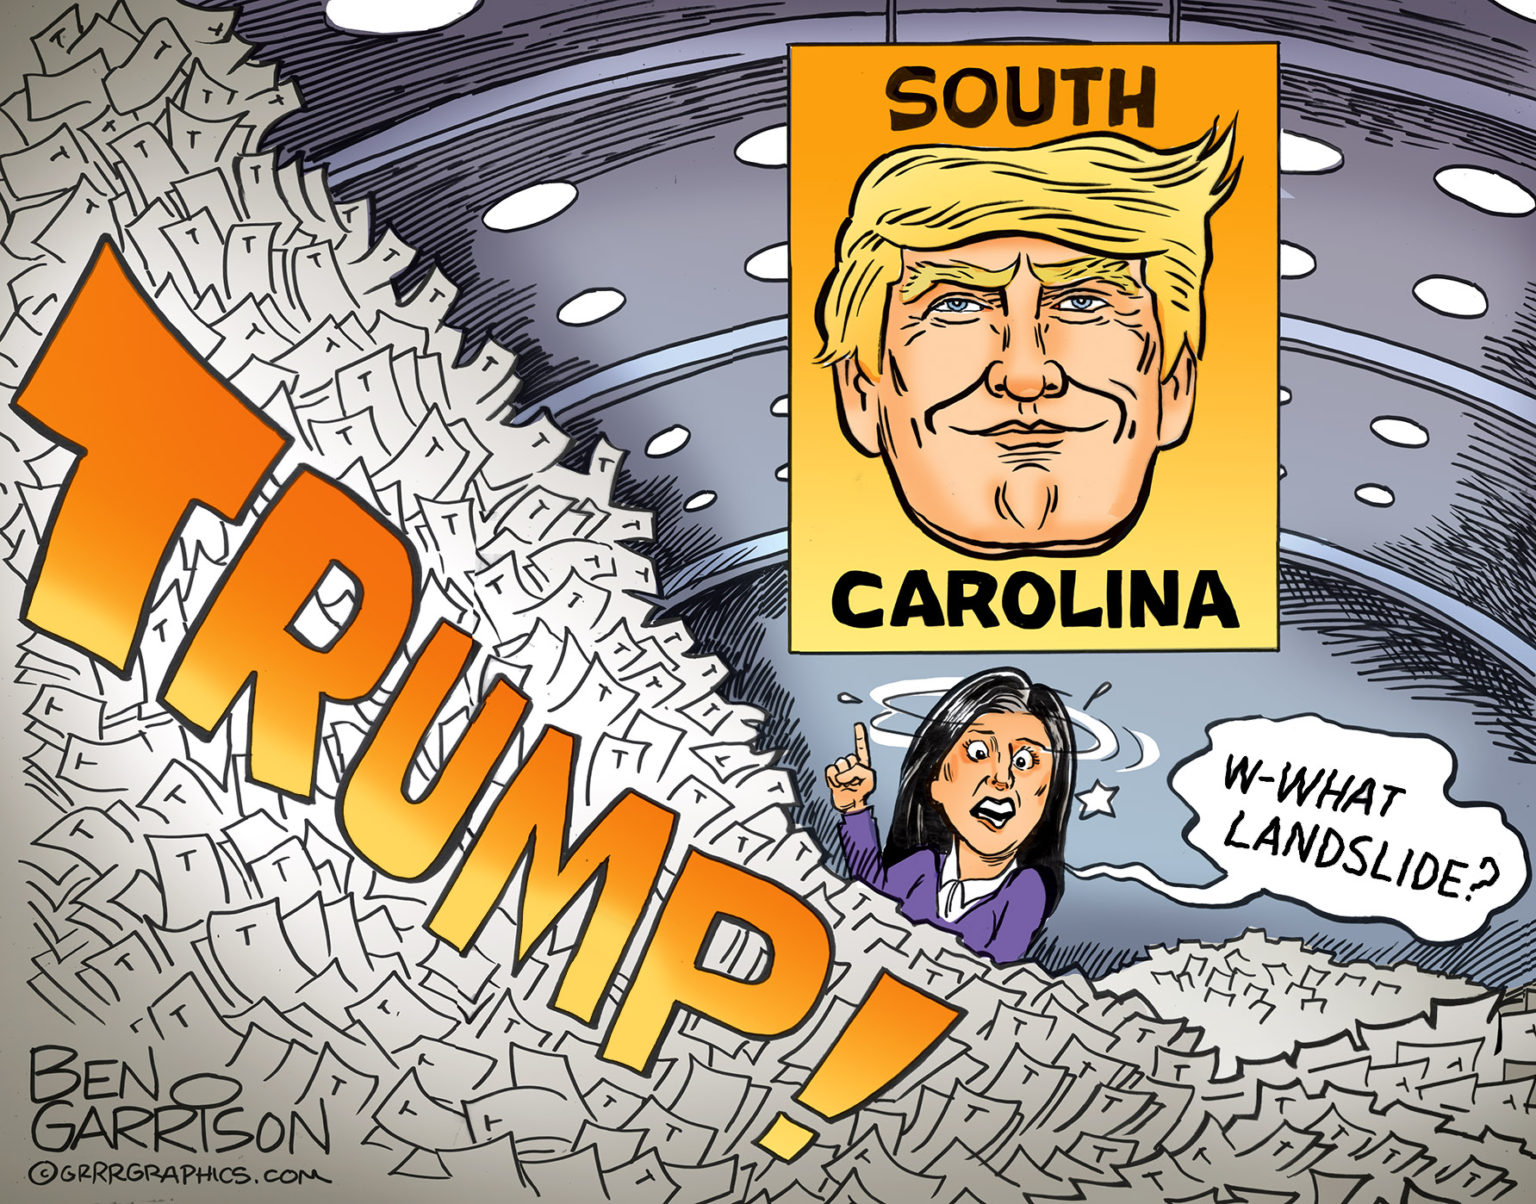 [Image: Trump_South_Carolina_landslide-1536x1204.jpg]